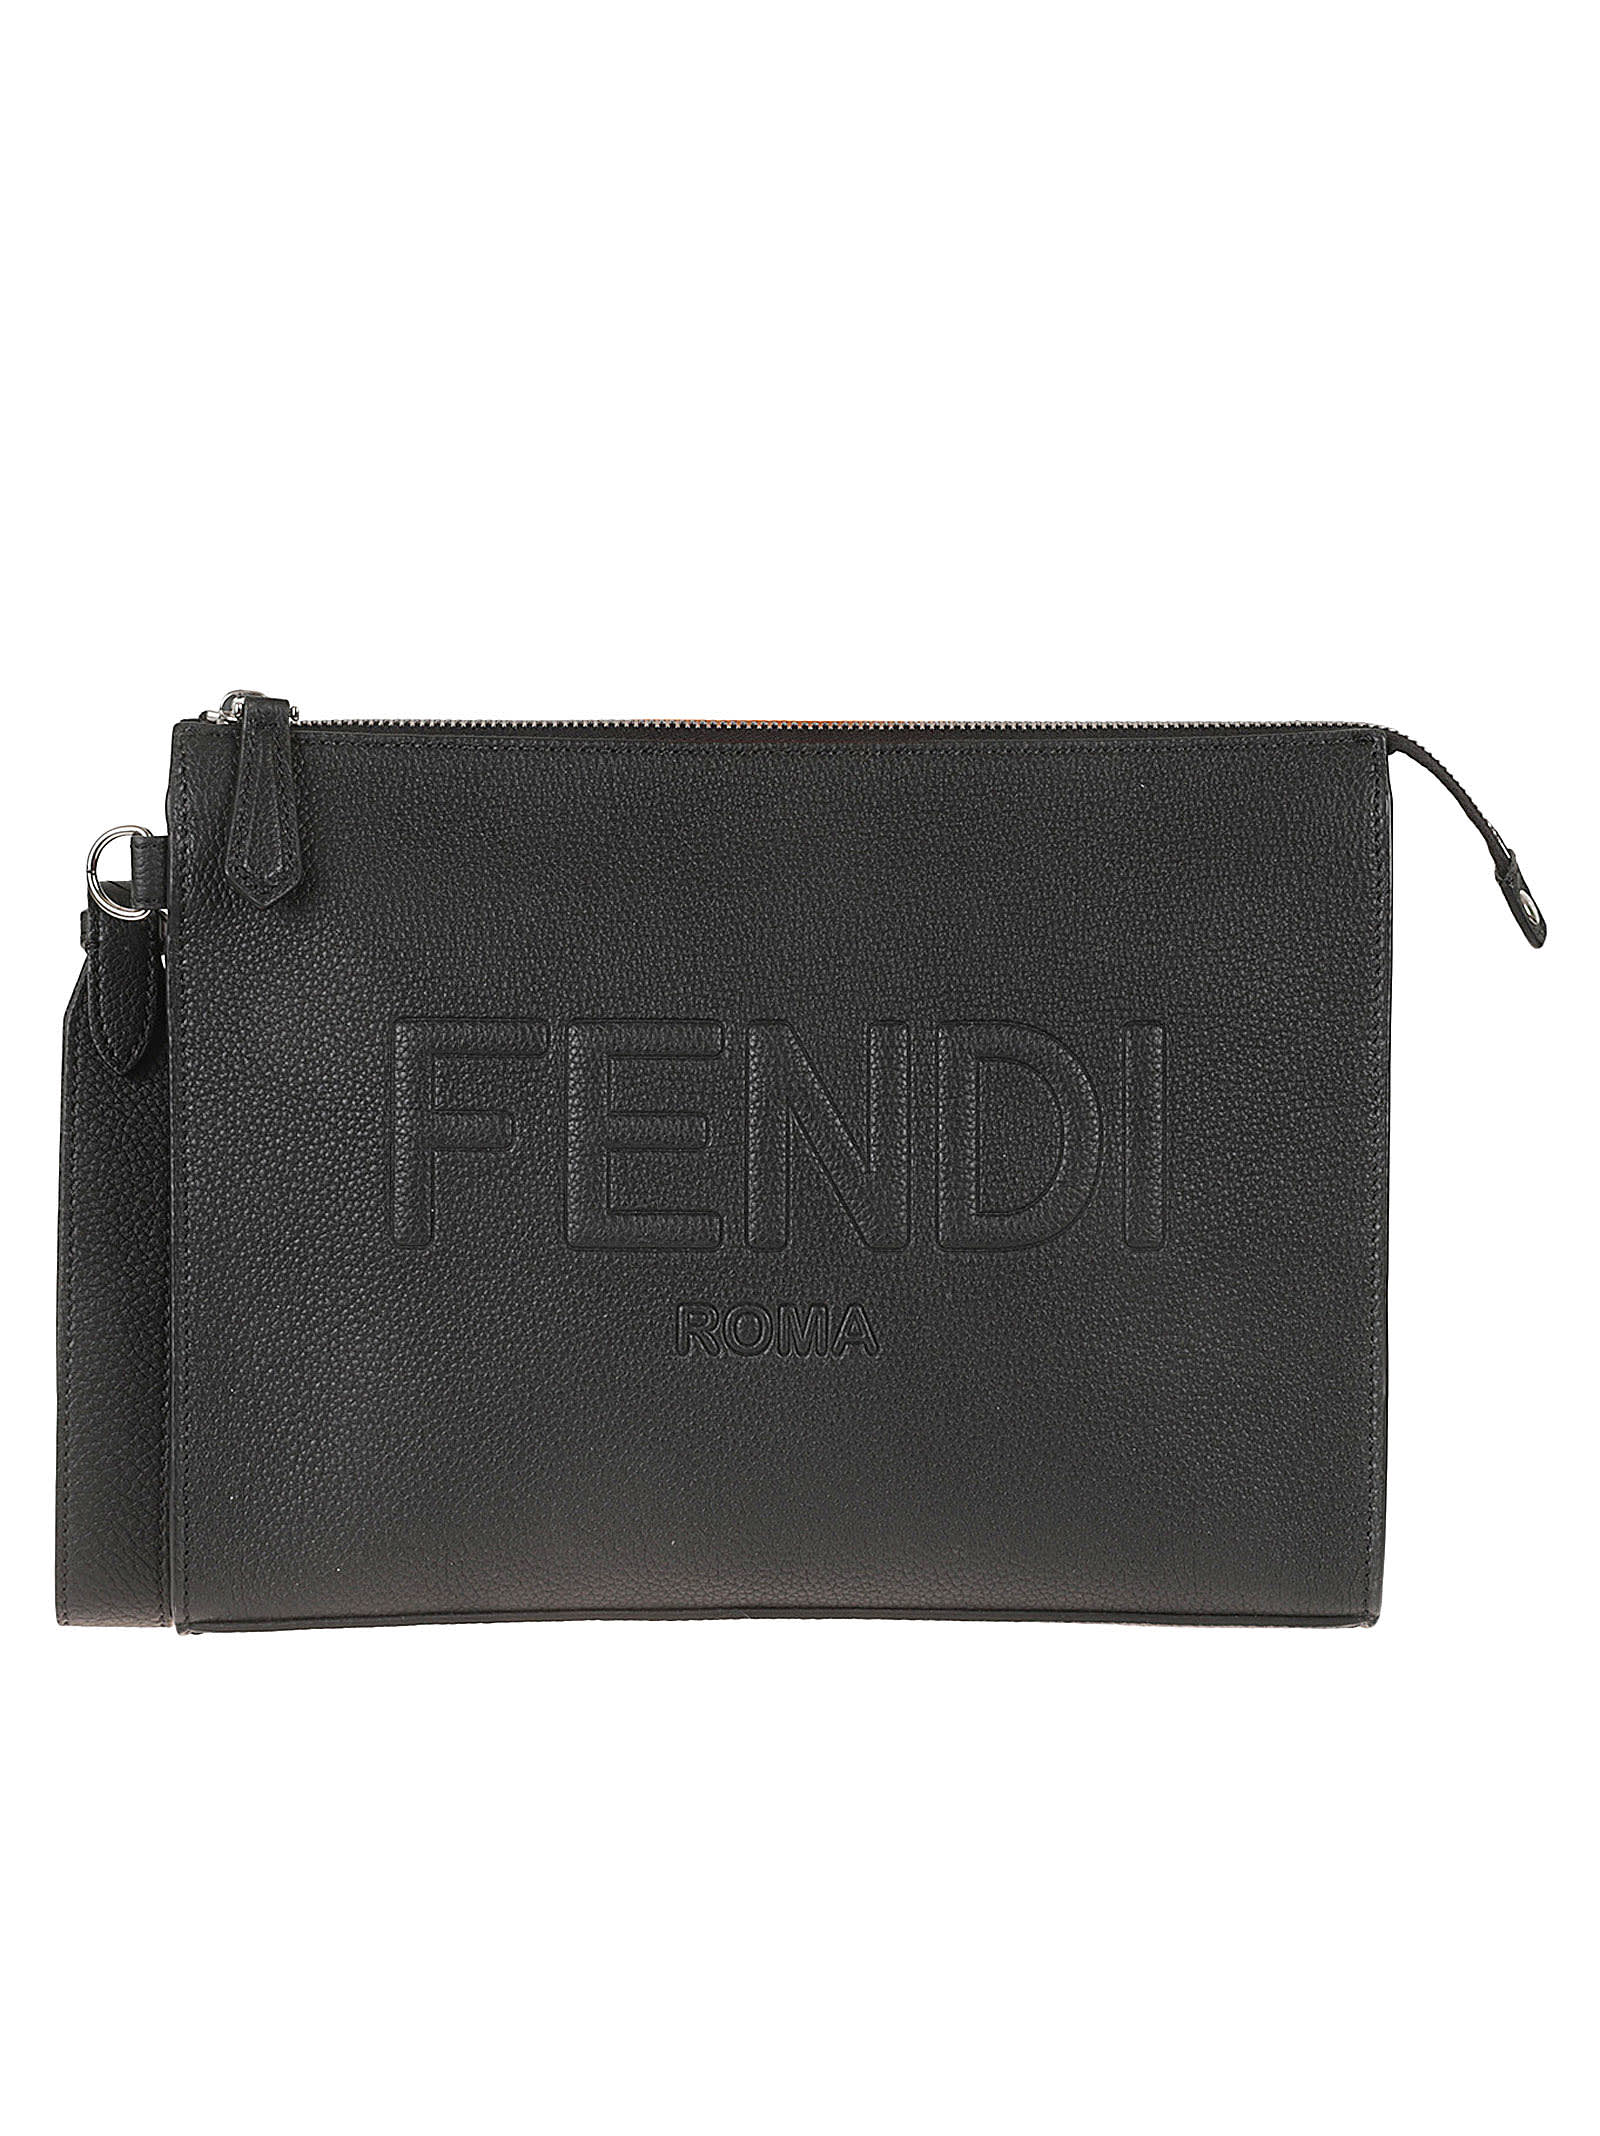 Fendi Logo Embossed Clutch